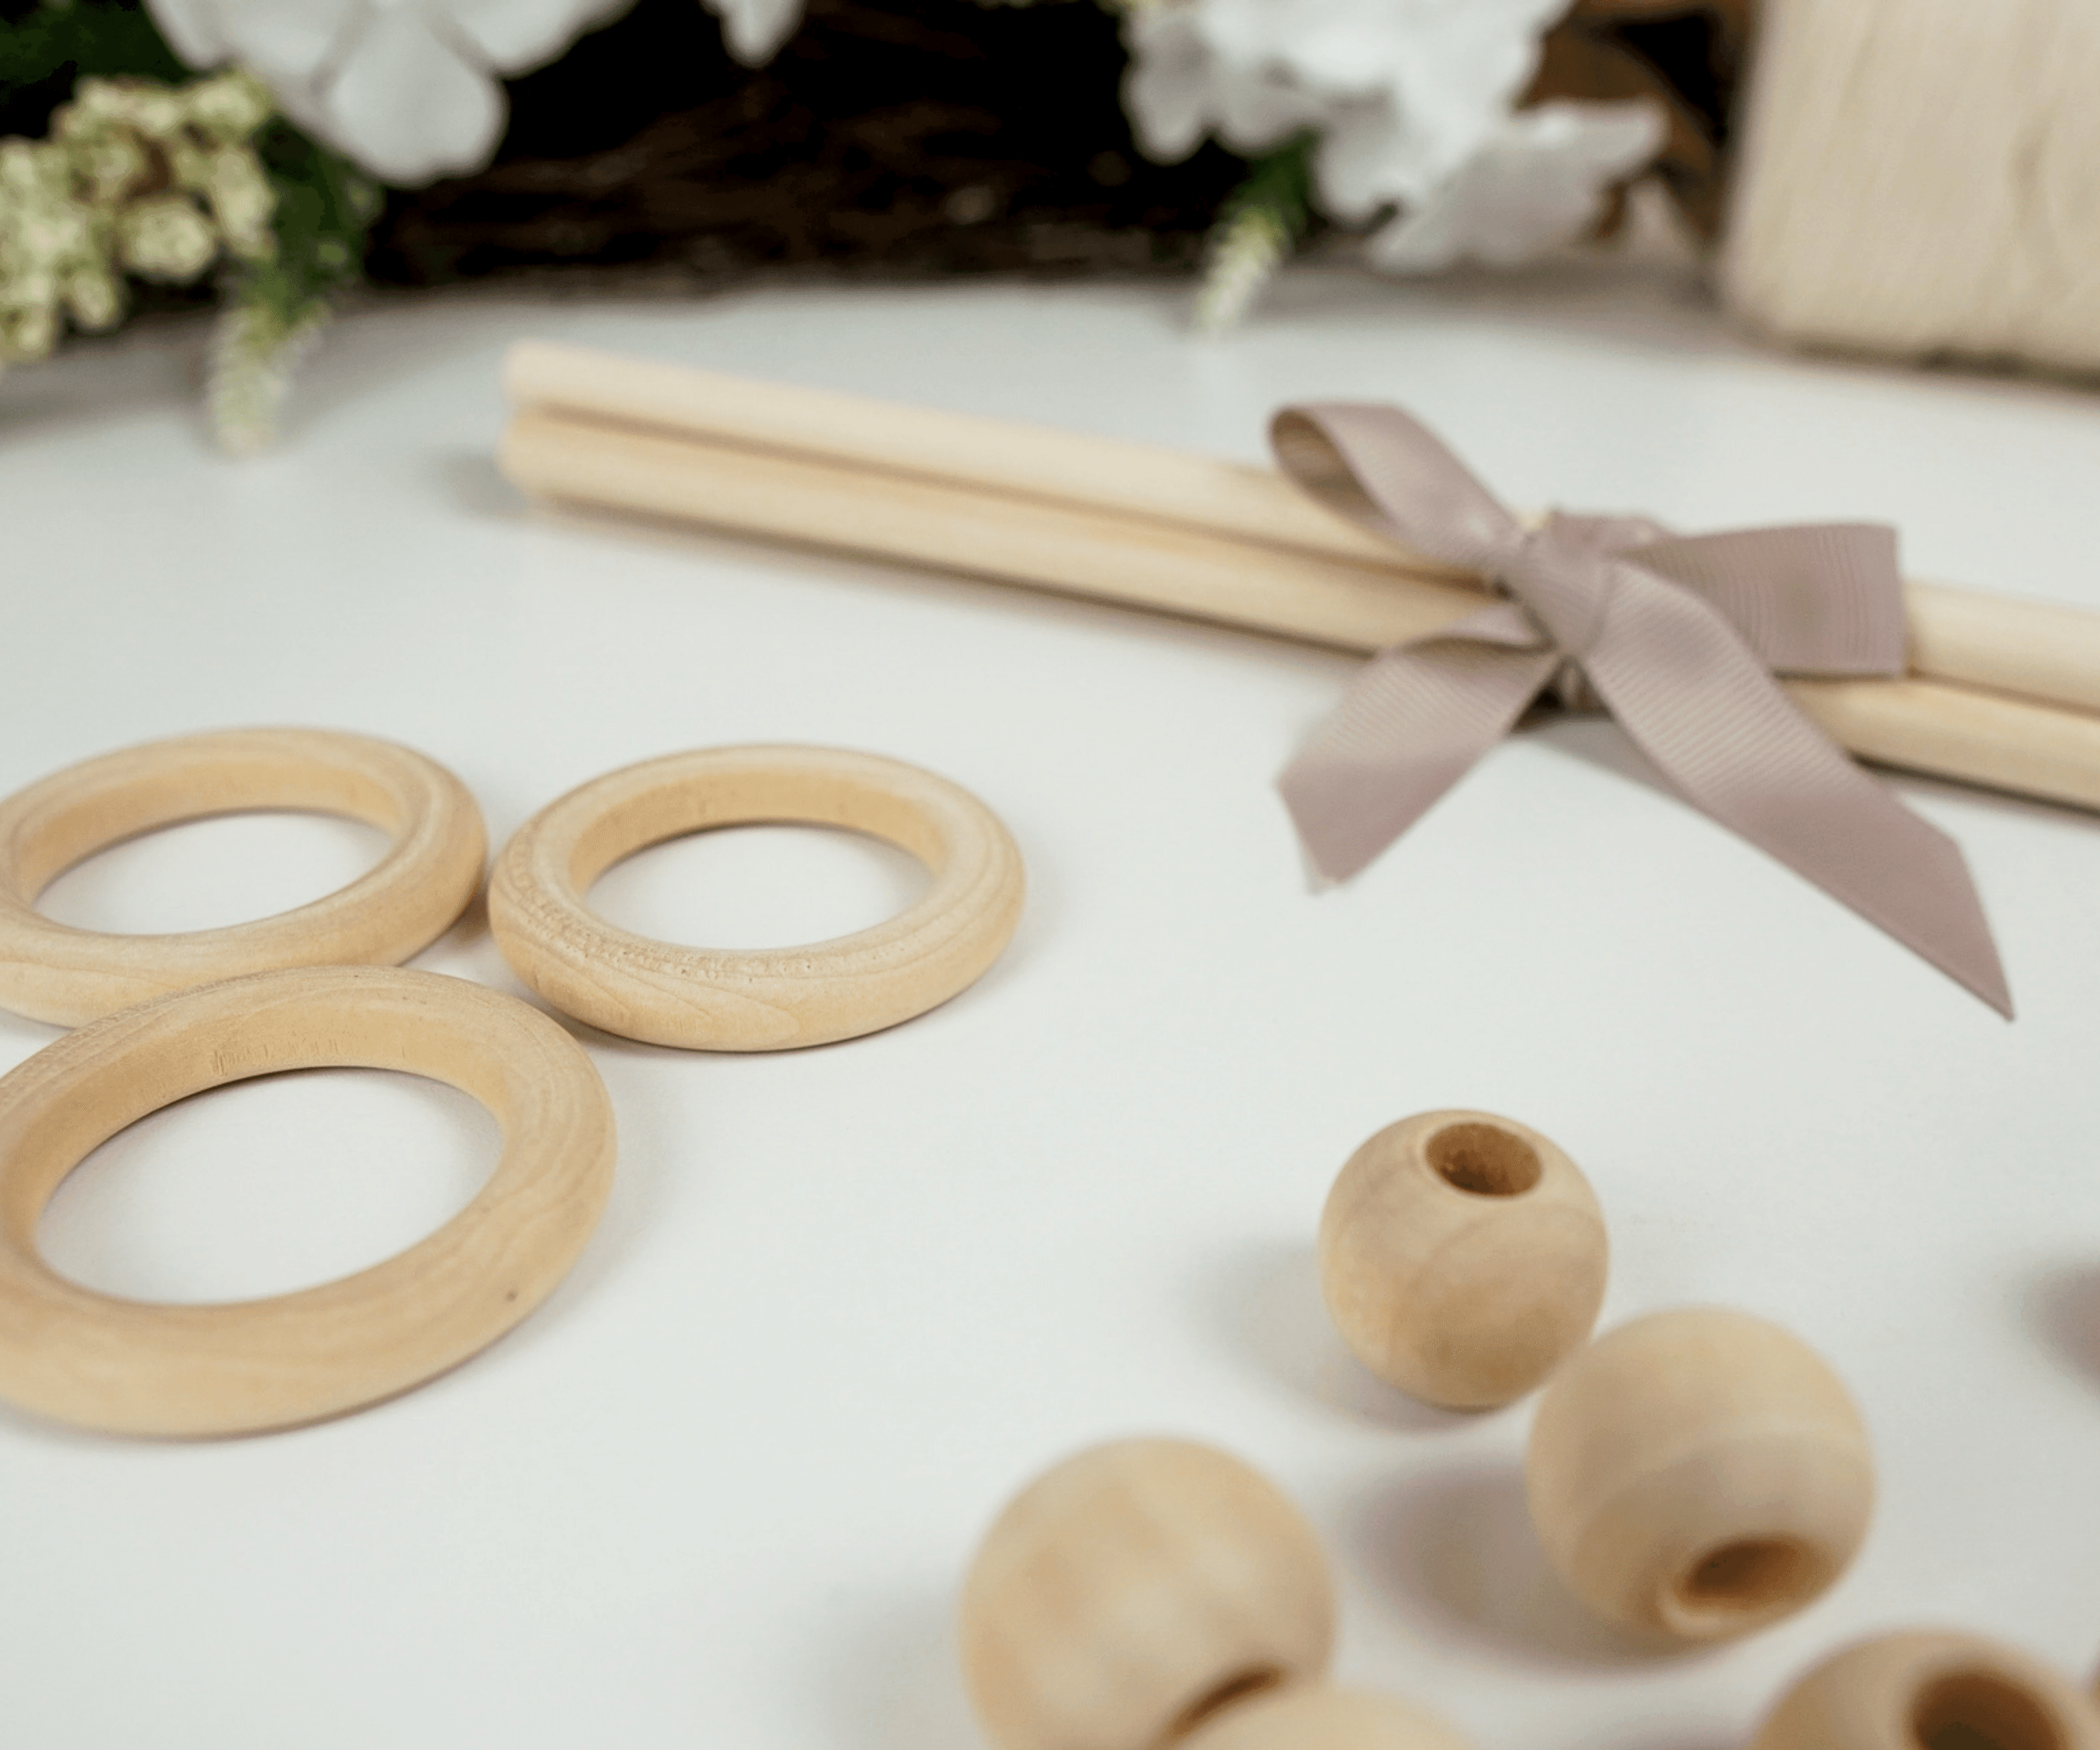 Medium Wooden Ring x 2 – AbooLoop